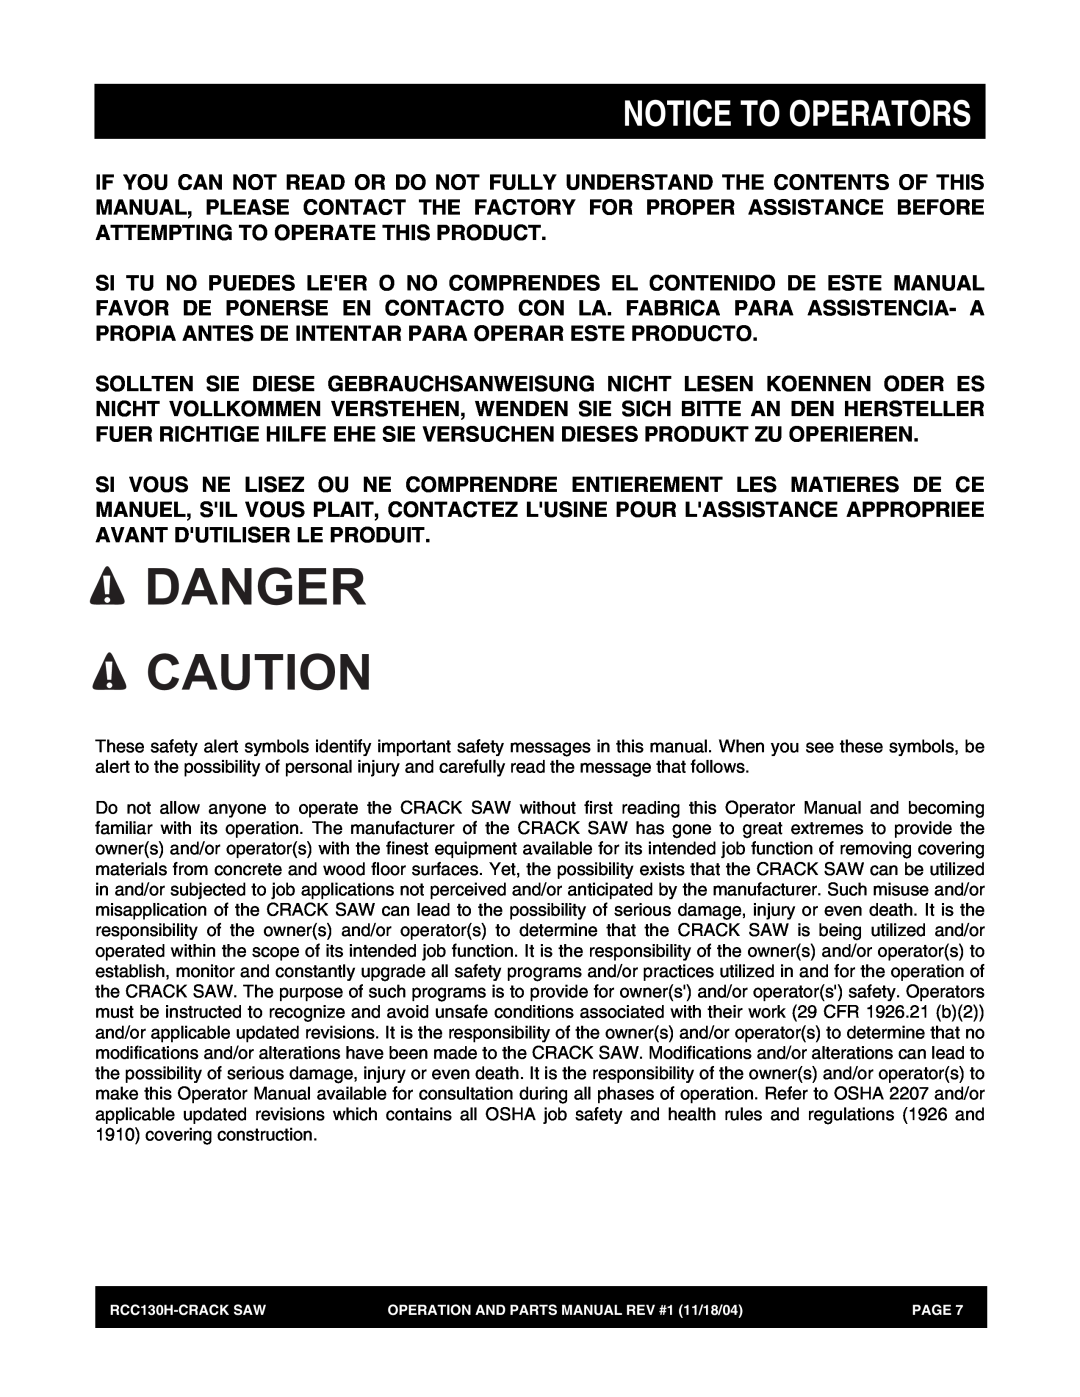 Stow RCC130H manual Danger, Notice To Operators 